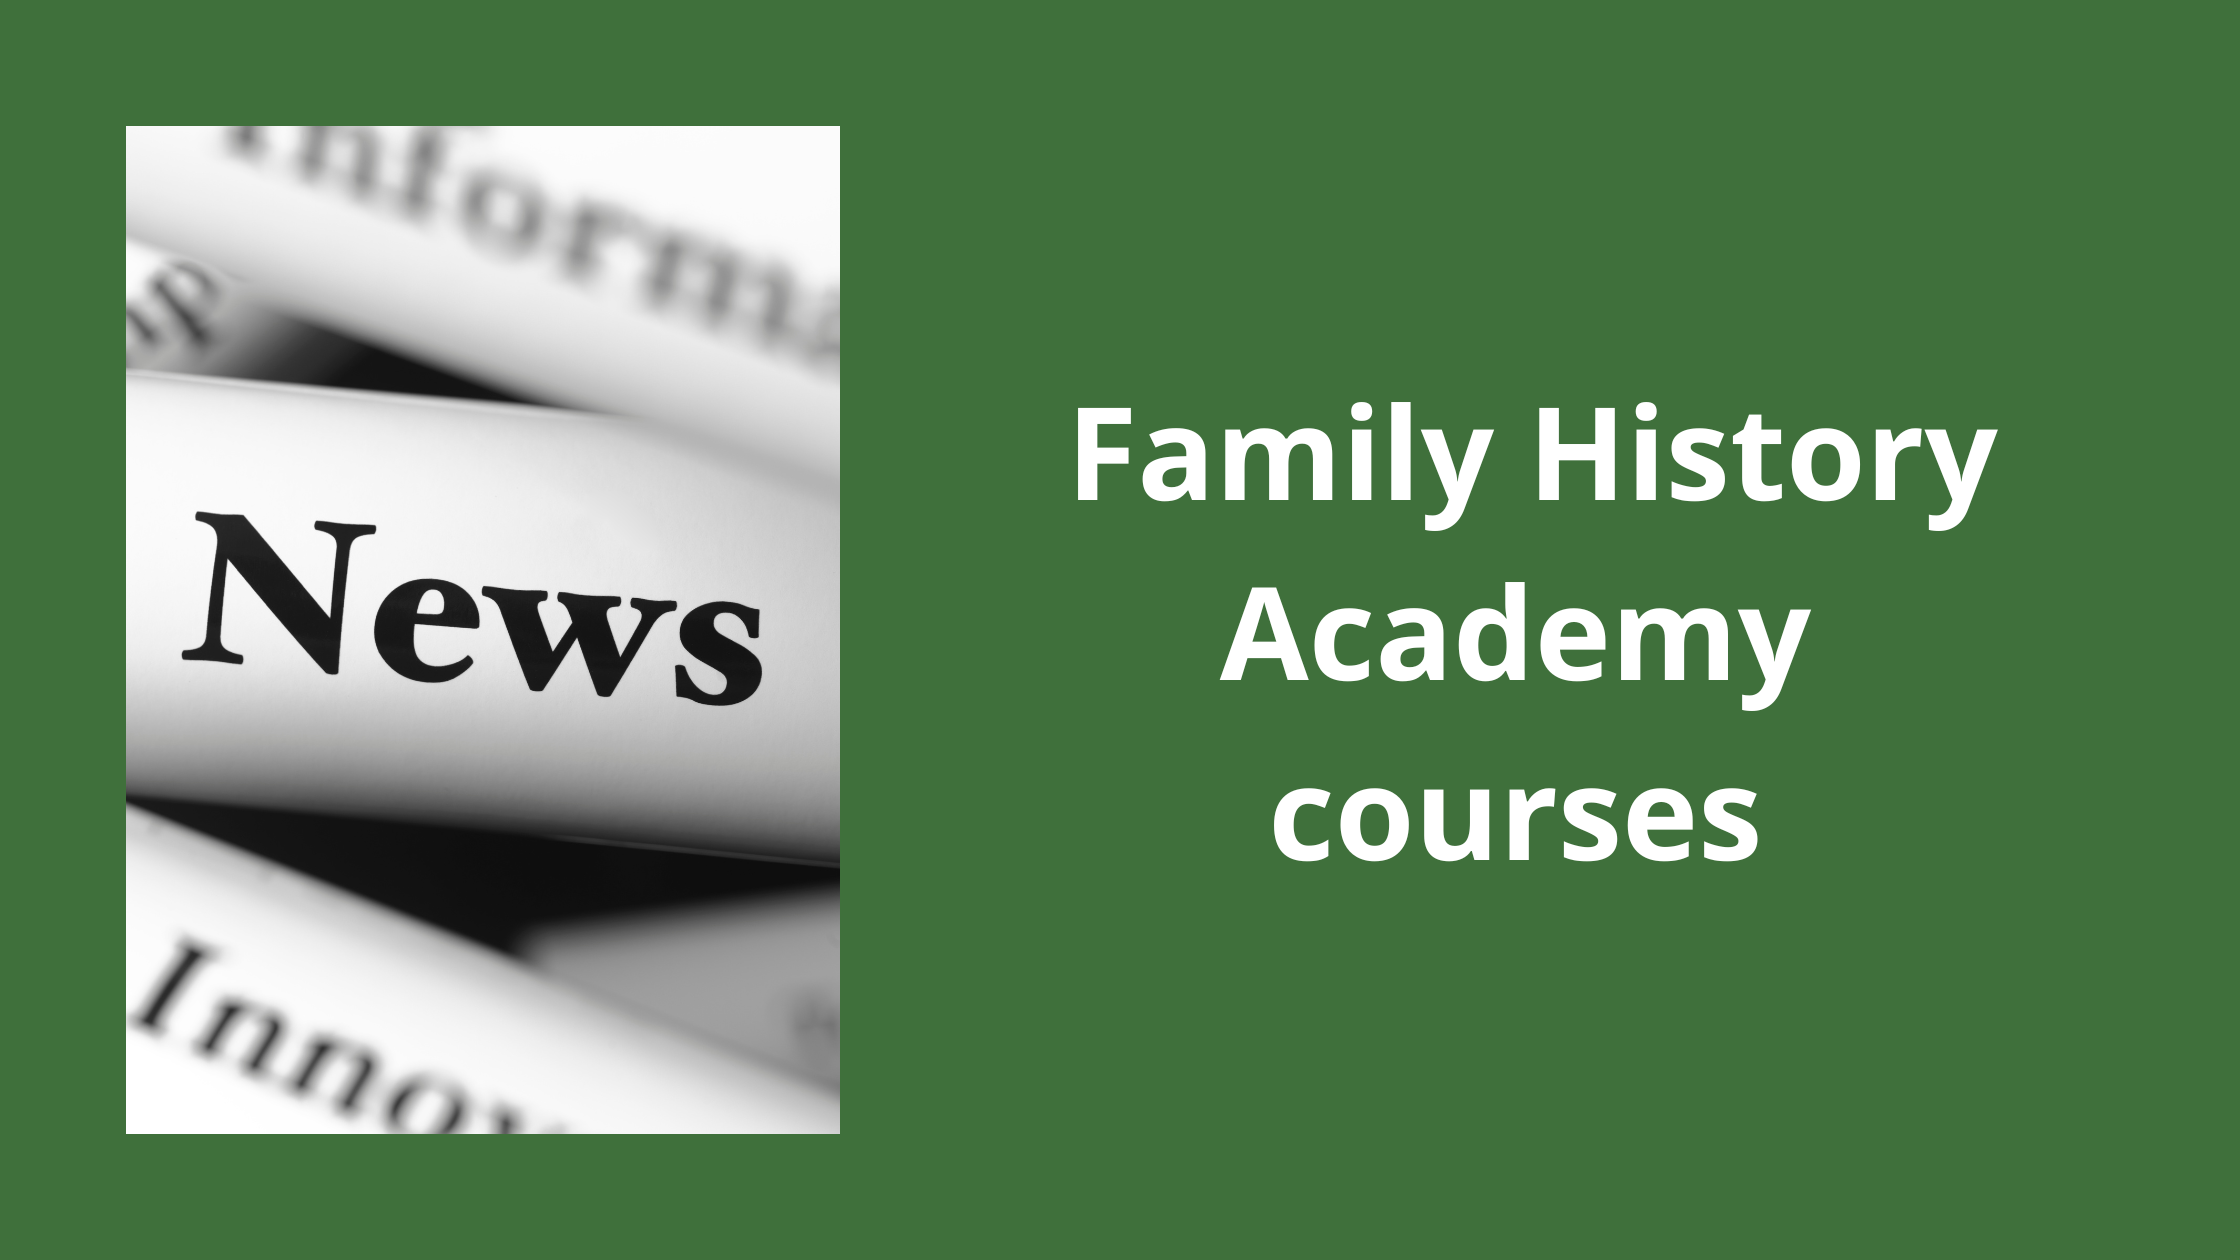 Family History Academy Courses